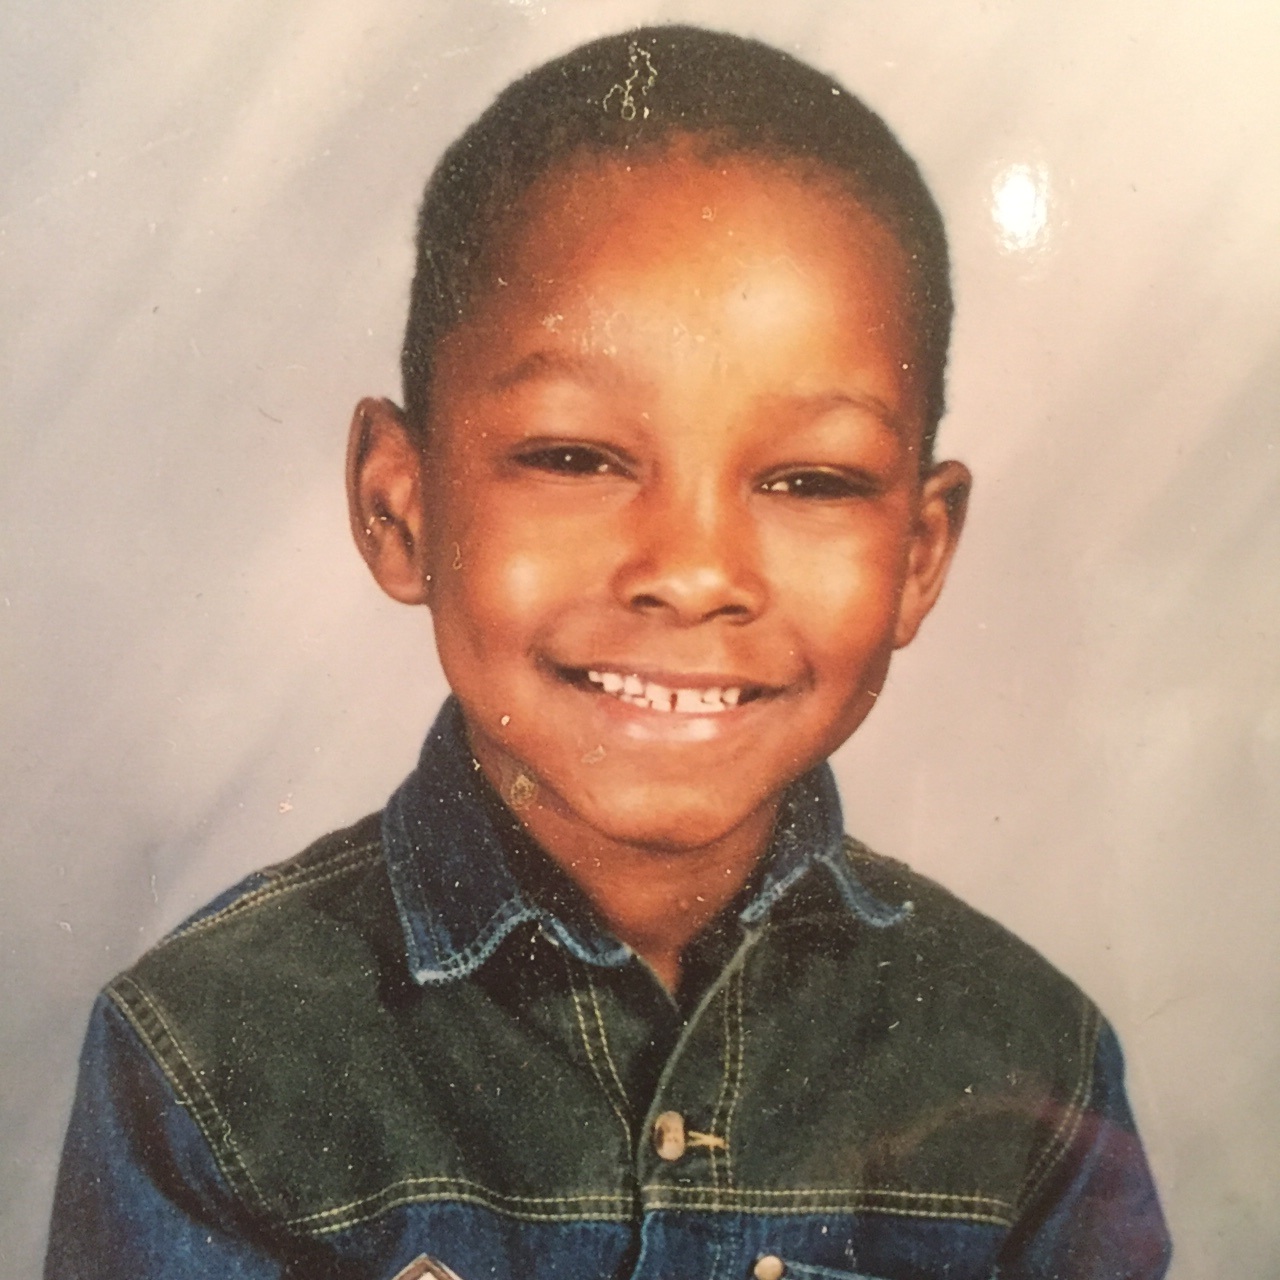 Tyshaun Barnett, 6 years old